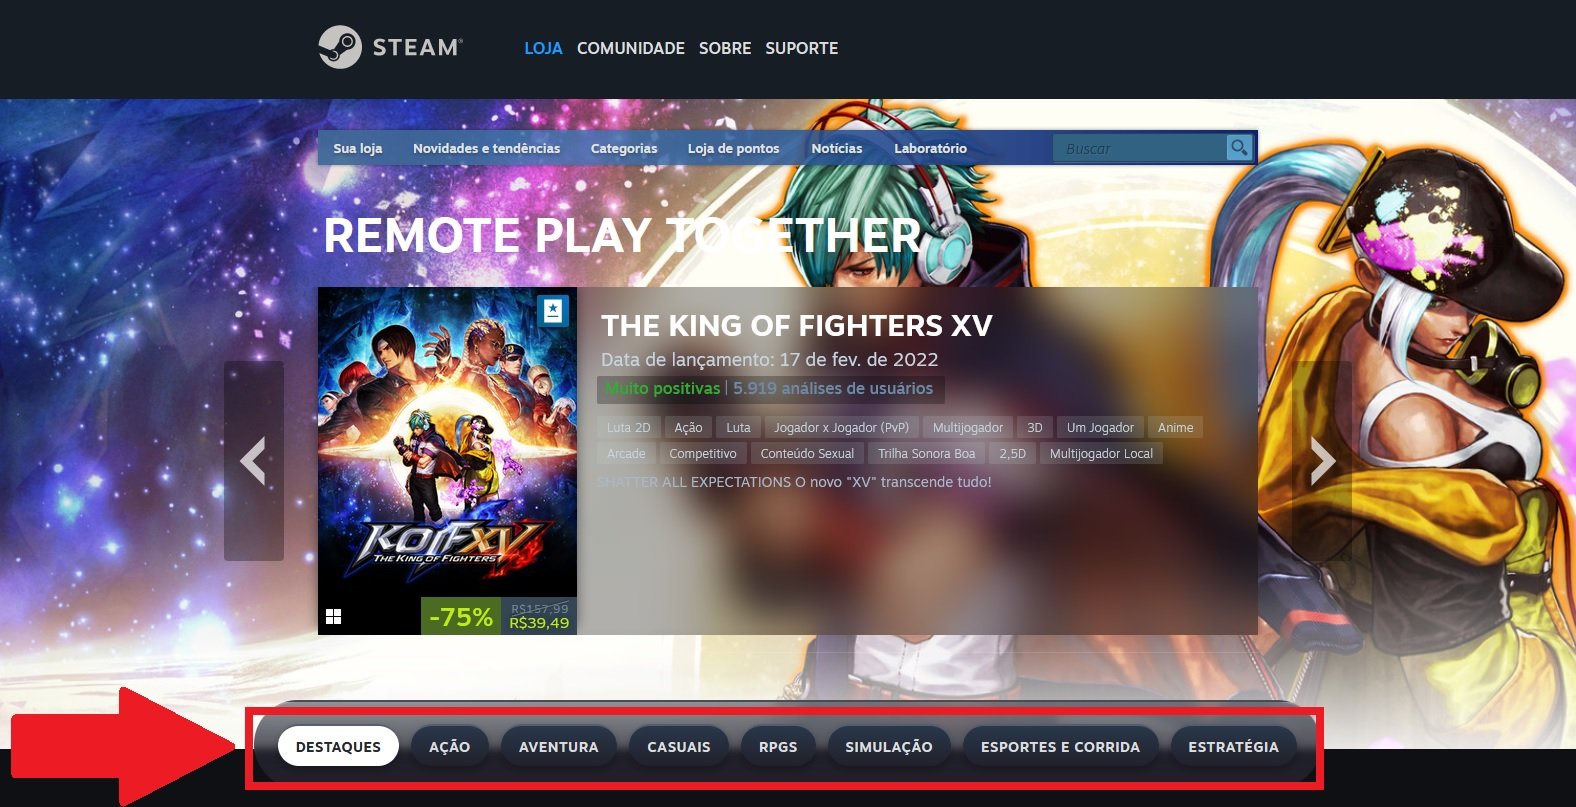 Steam Brasil - Steam Remote Play Together é oficialmente